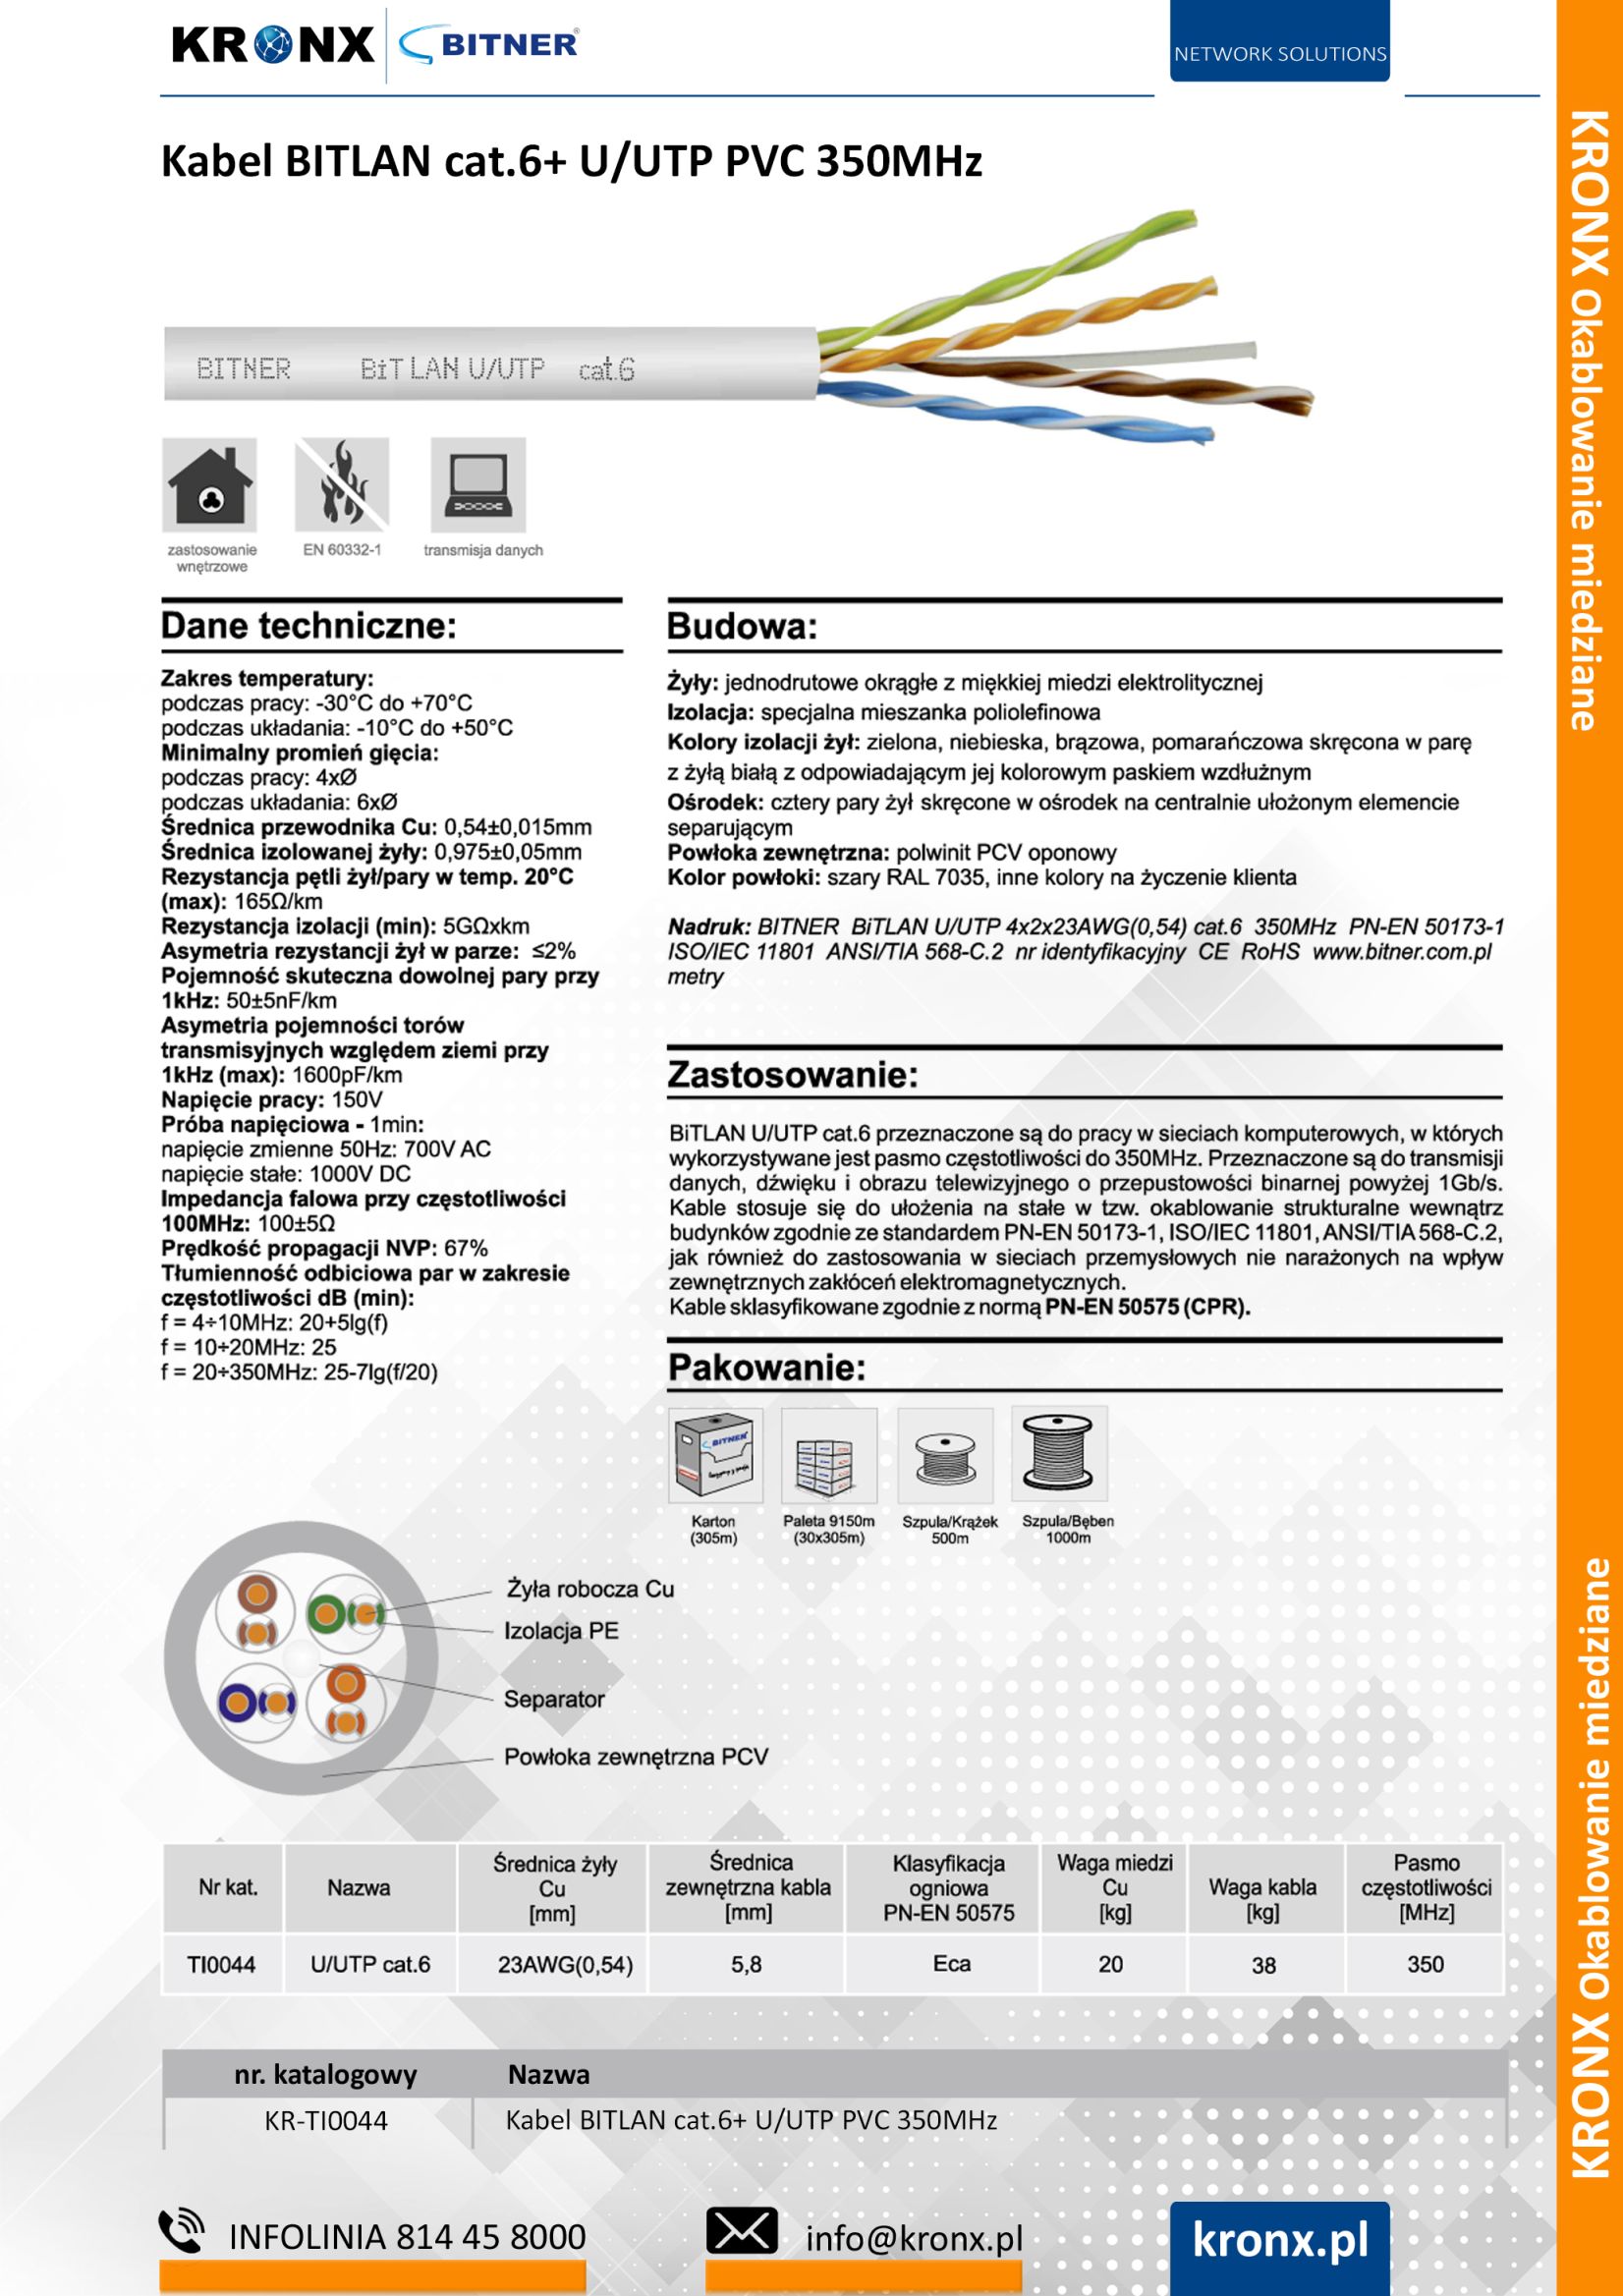 Kabel BITLAN cat.6 UUTP PVC 350MHz